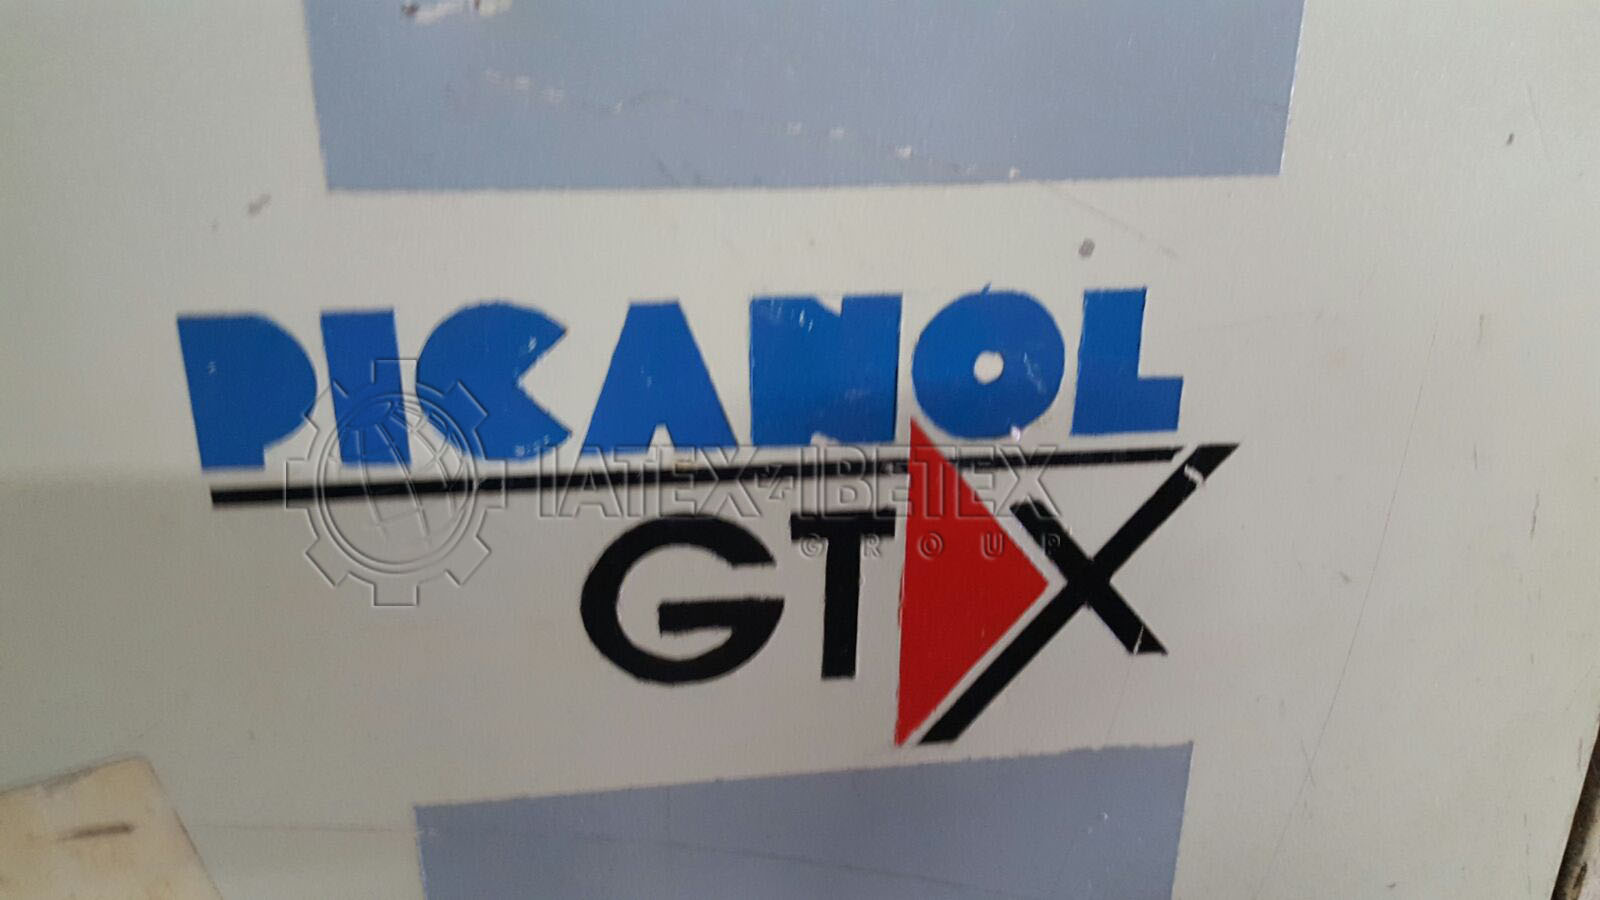 09 x Teares Picanol GTX  1,90m Maquineta